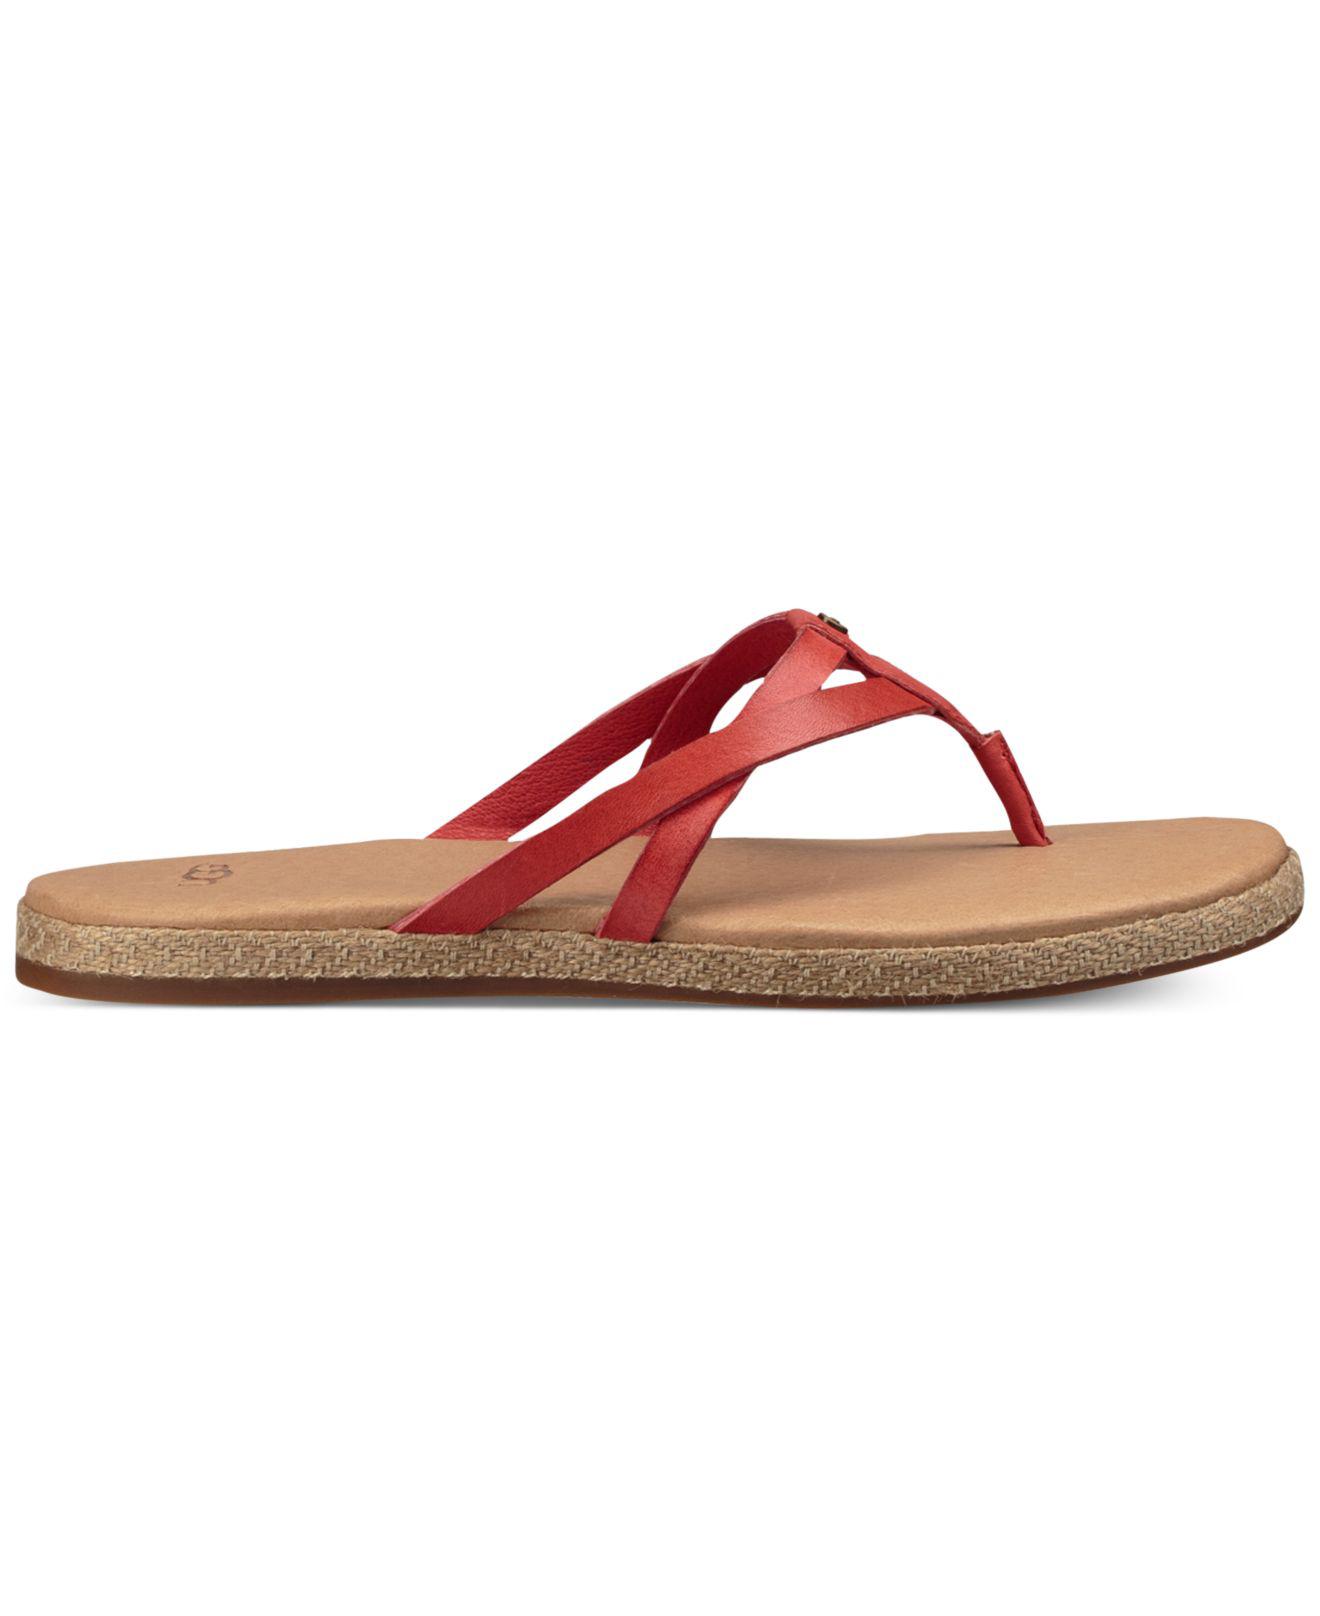 UGG Leather Annice Flip-flop Sandals - Lyst